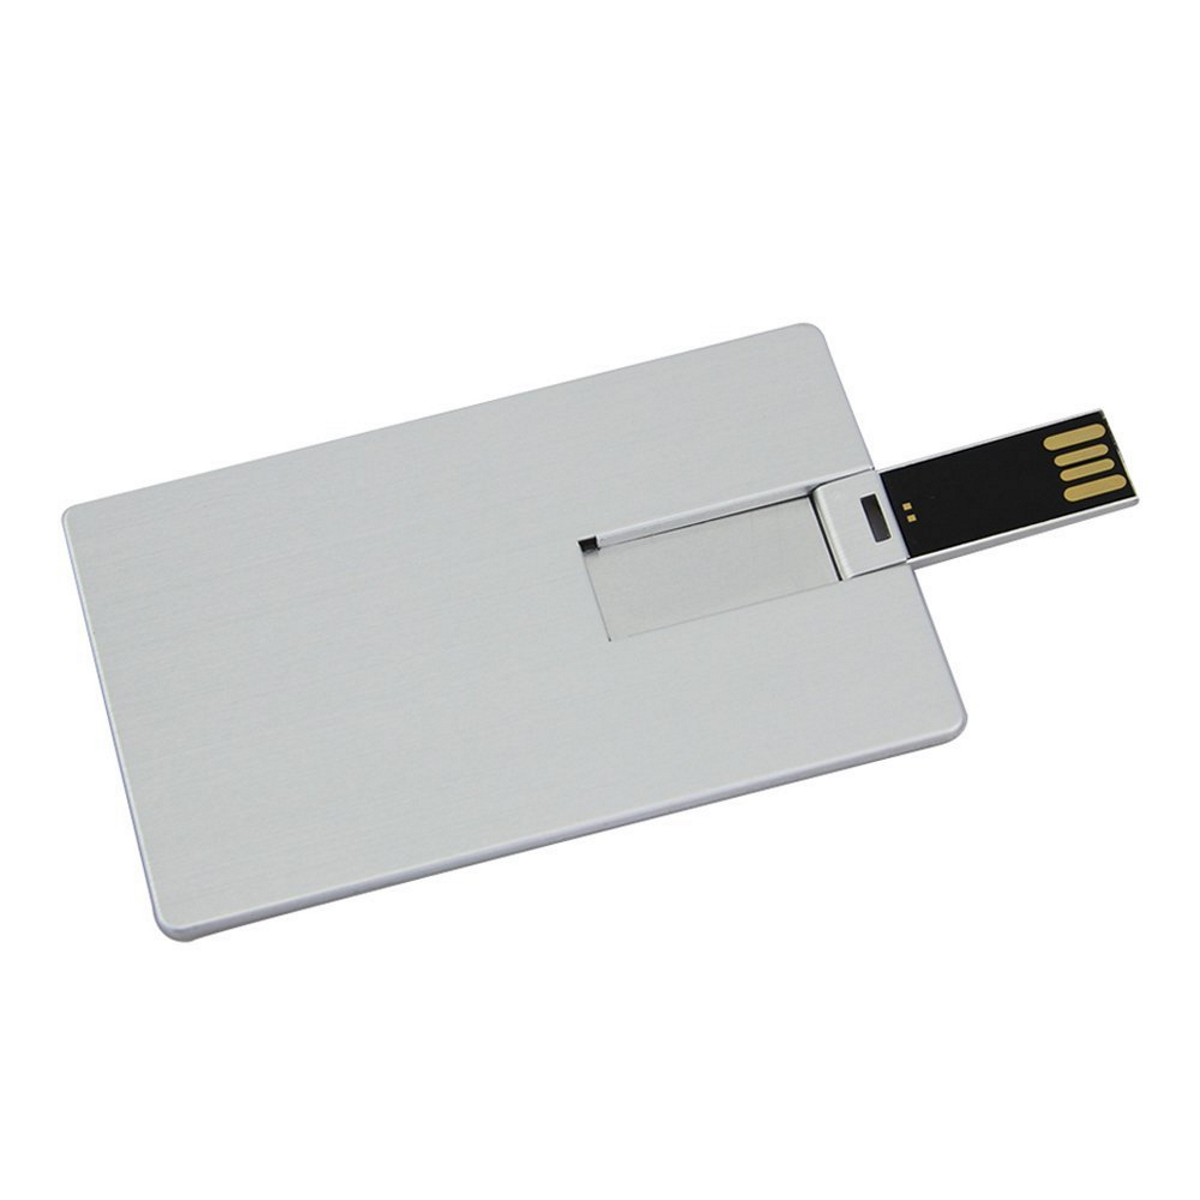 GB) Metall-Kreditkarte 8 GERMANY USB-Stick (Silber, USB ®